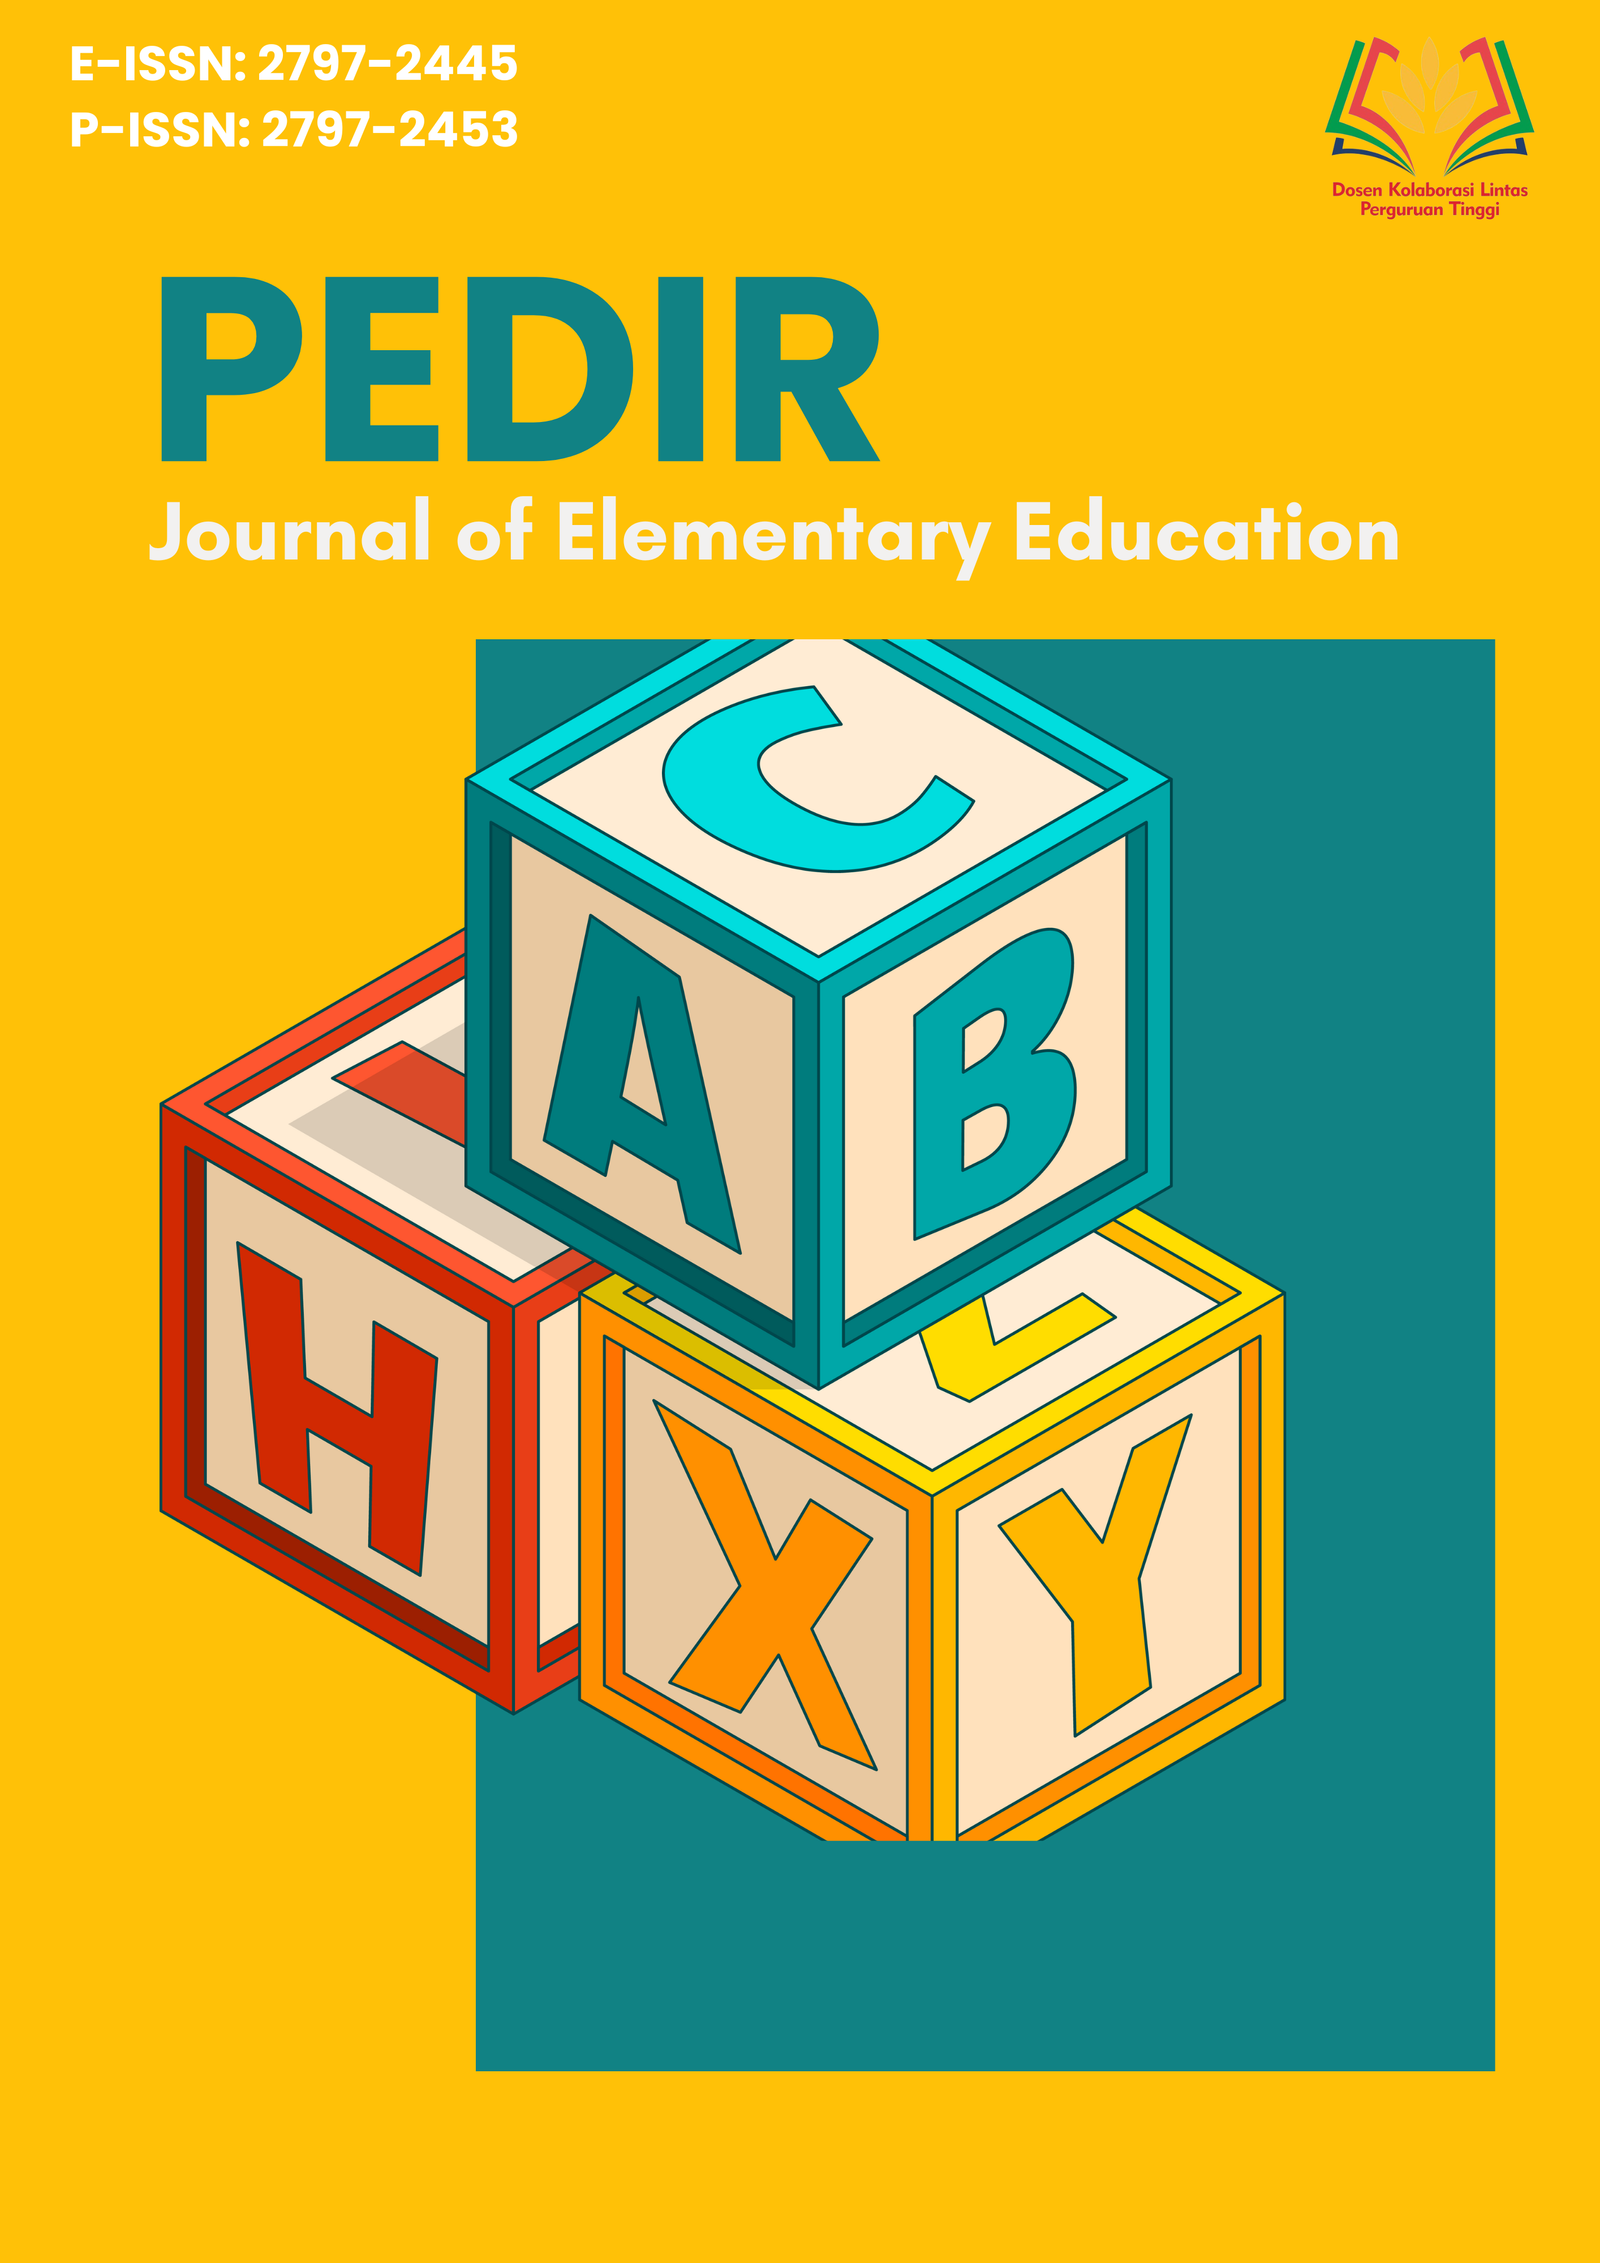 PEDIR: Journal of Elementary Education